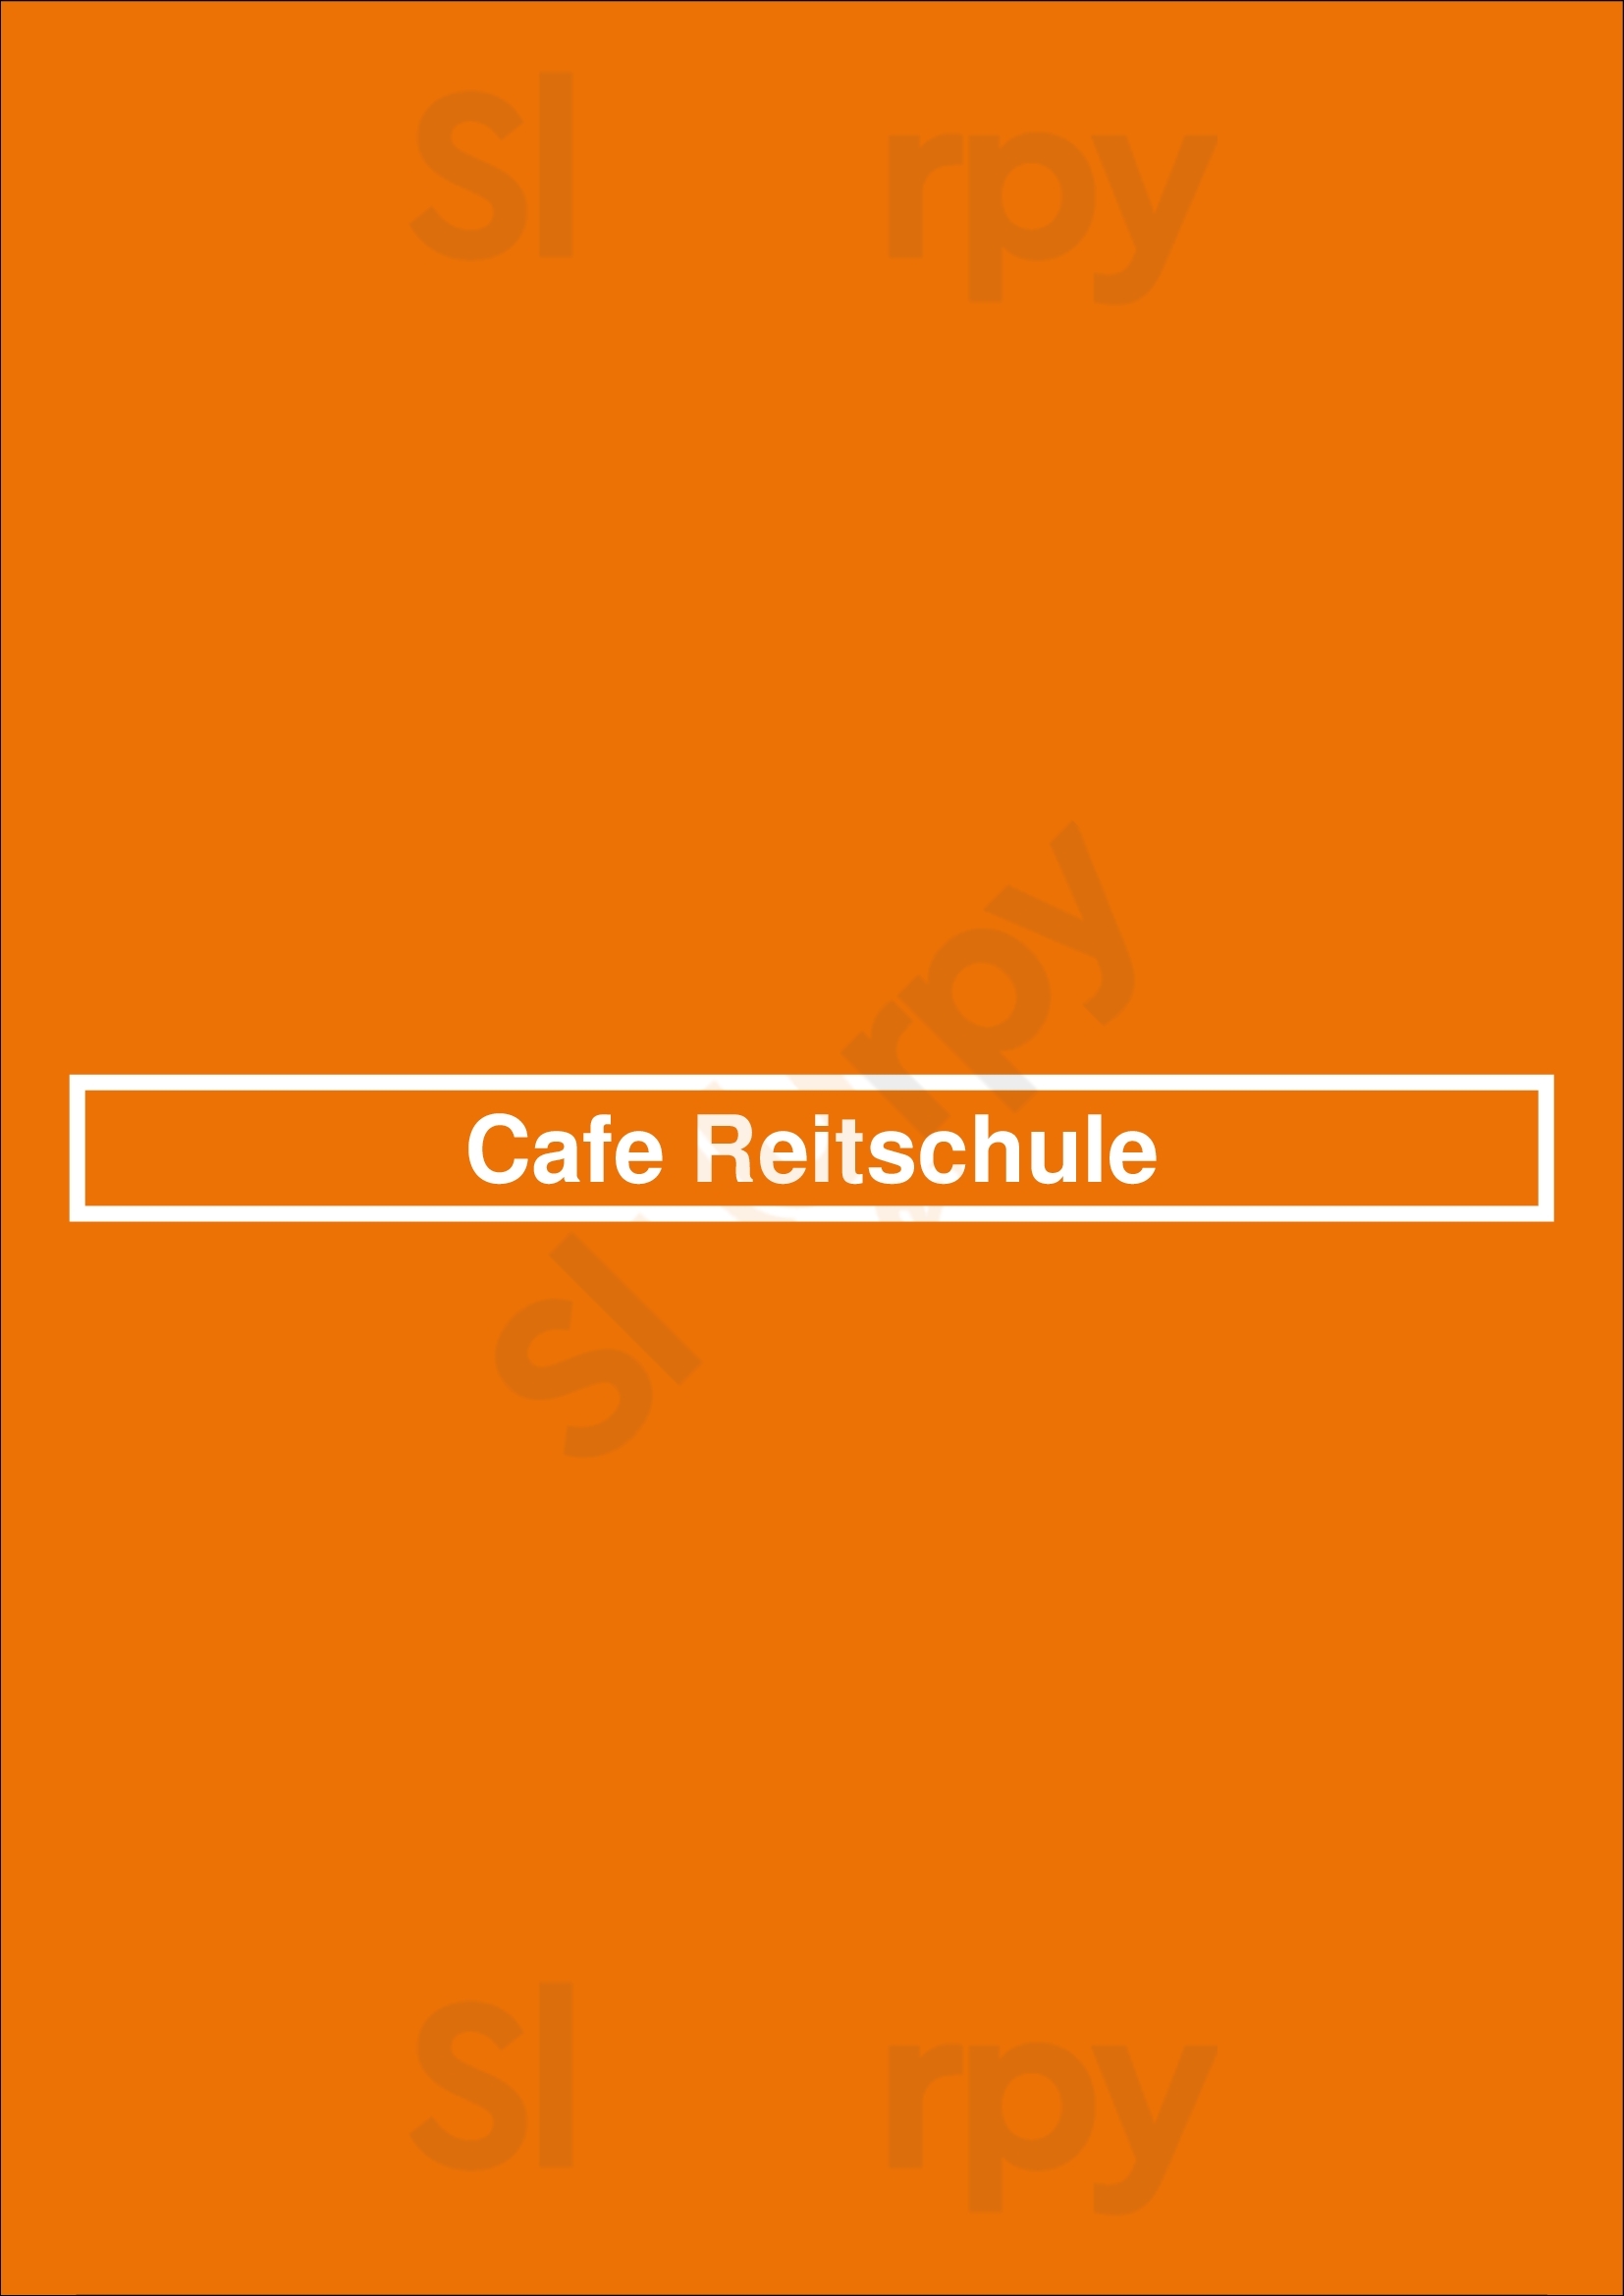 Cafe Reitschule München Menu - 1